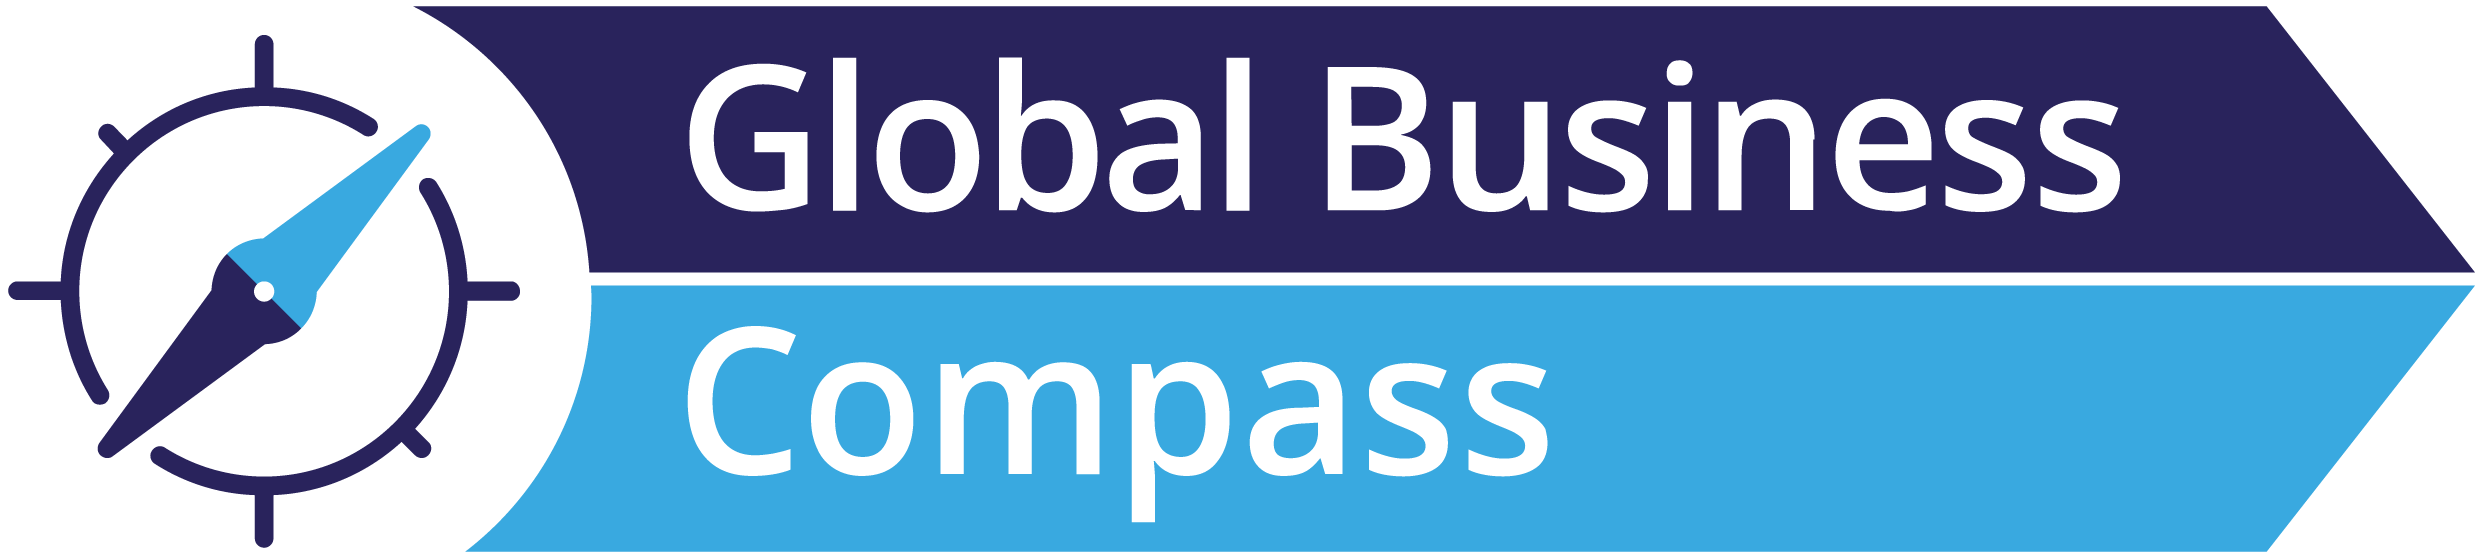 Global Business Compass